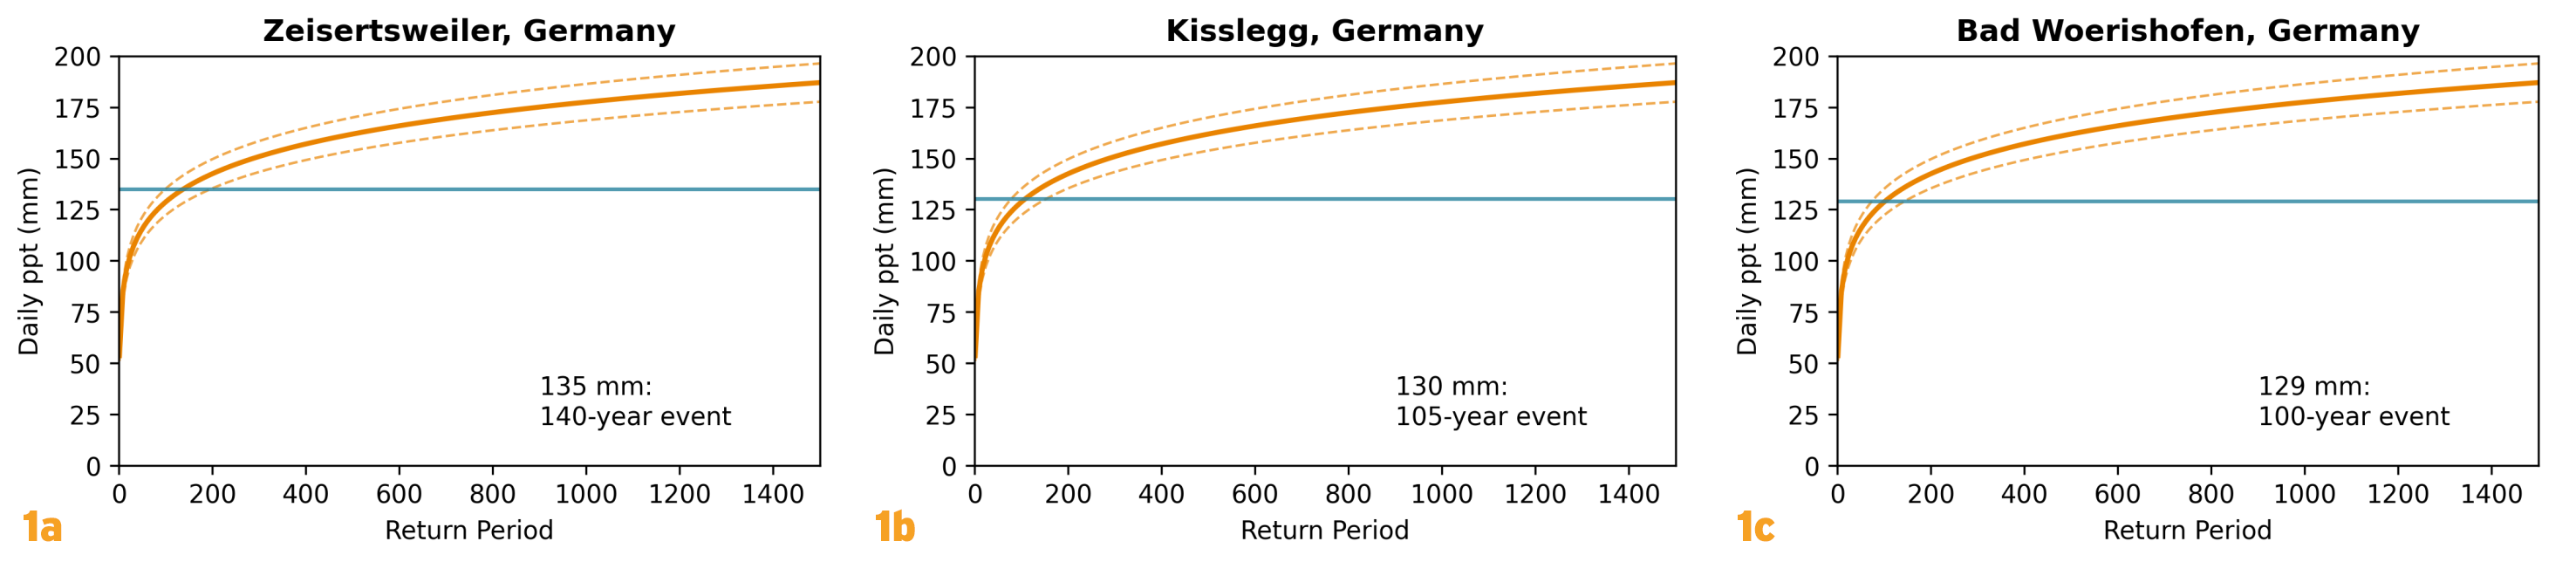 Return period analysis graph for Zeisertsweiler, Kißlegg and Bad Wörishofen